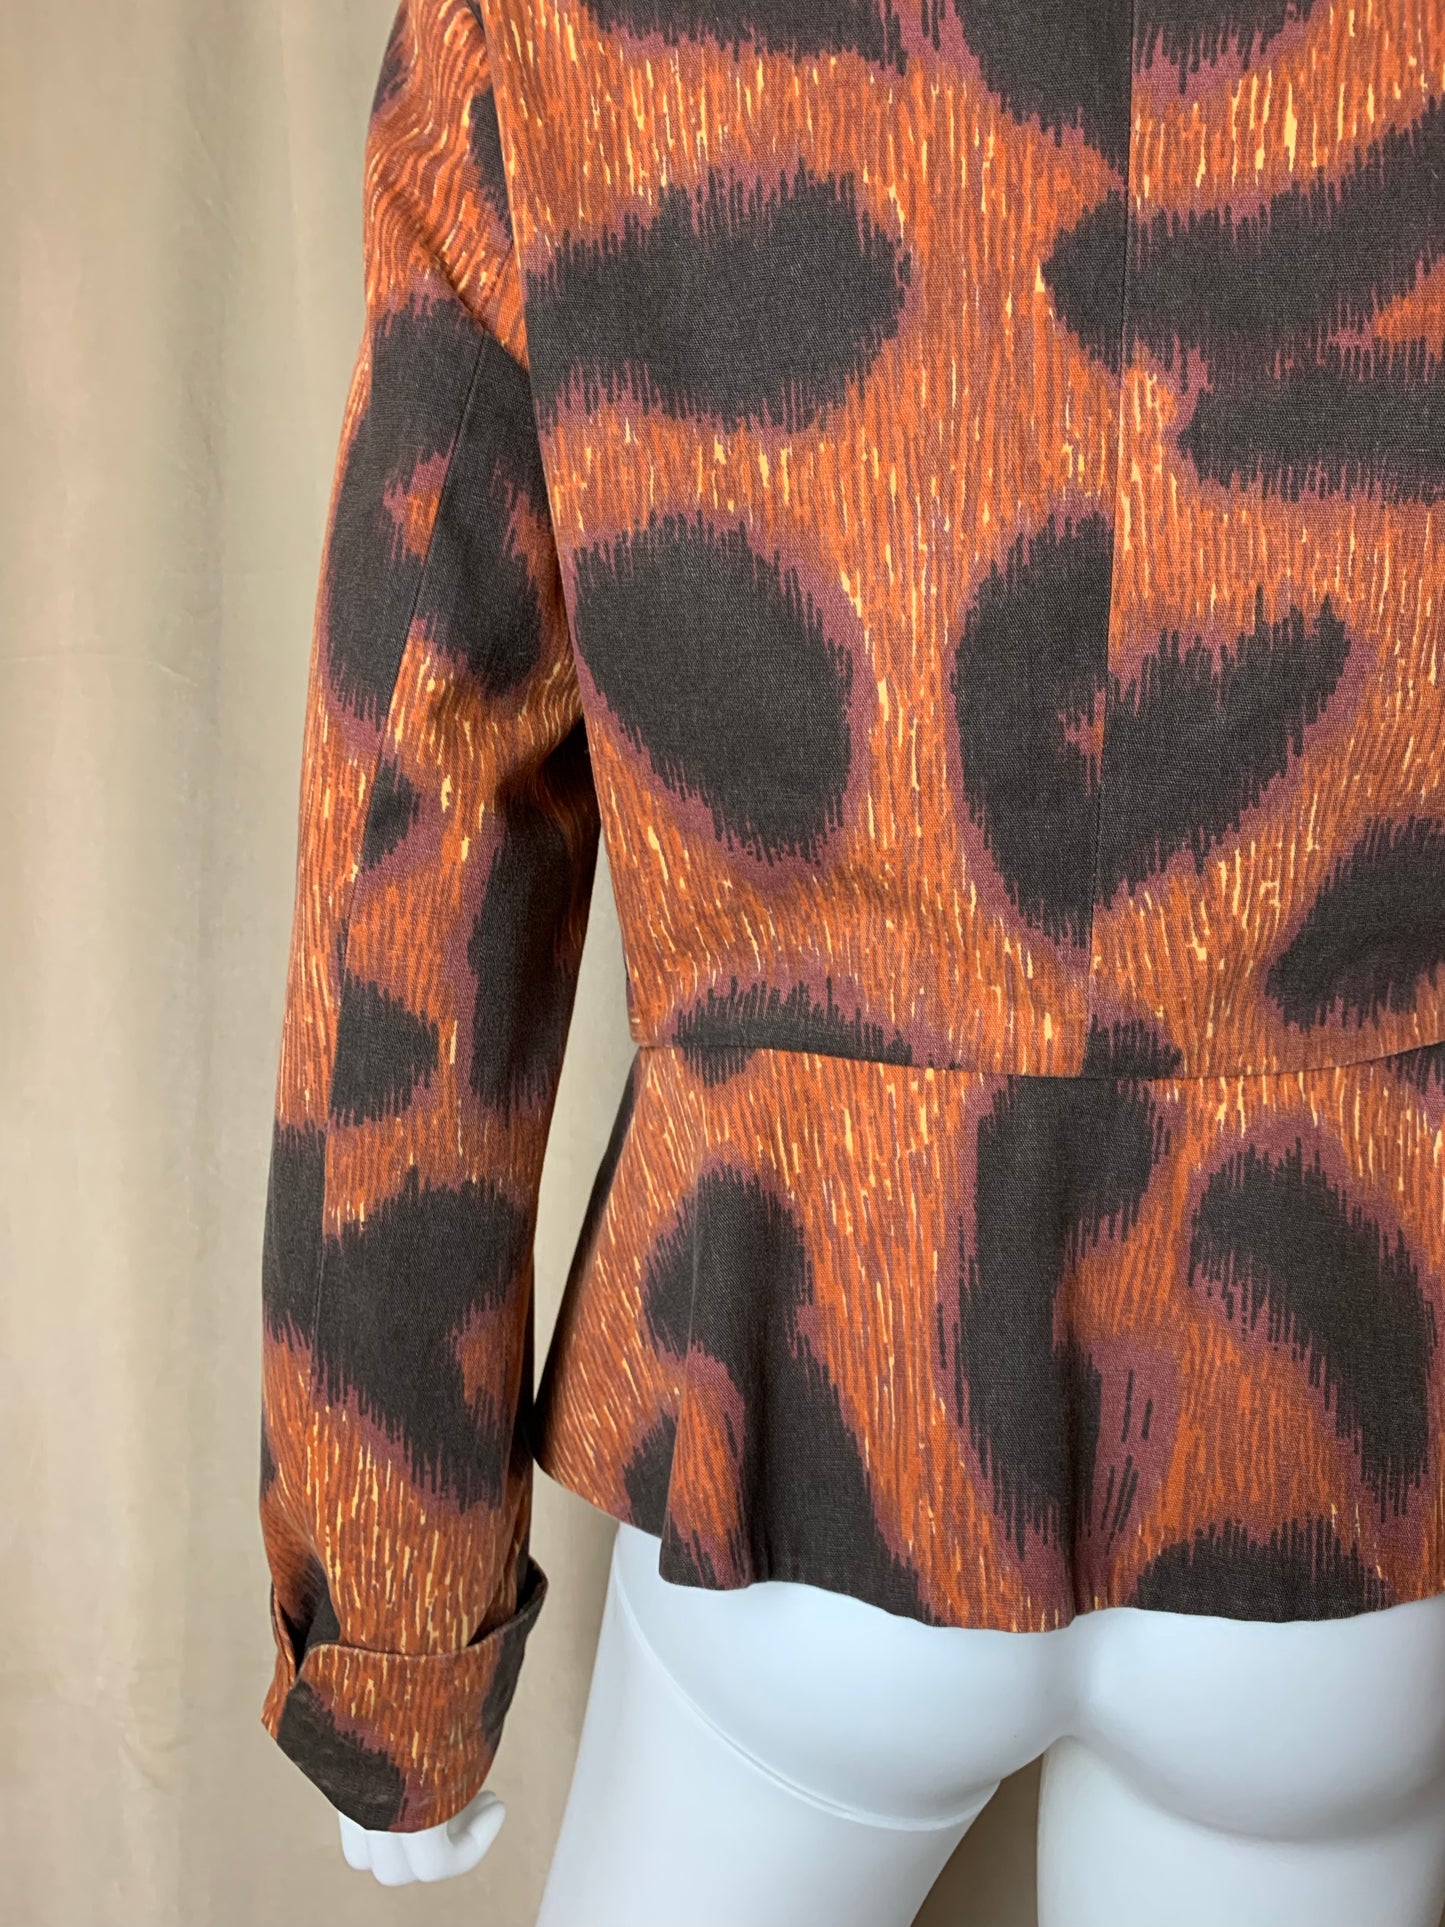 Vivienne Westwood SS 1994 Café Society Leopard Jacket